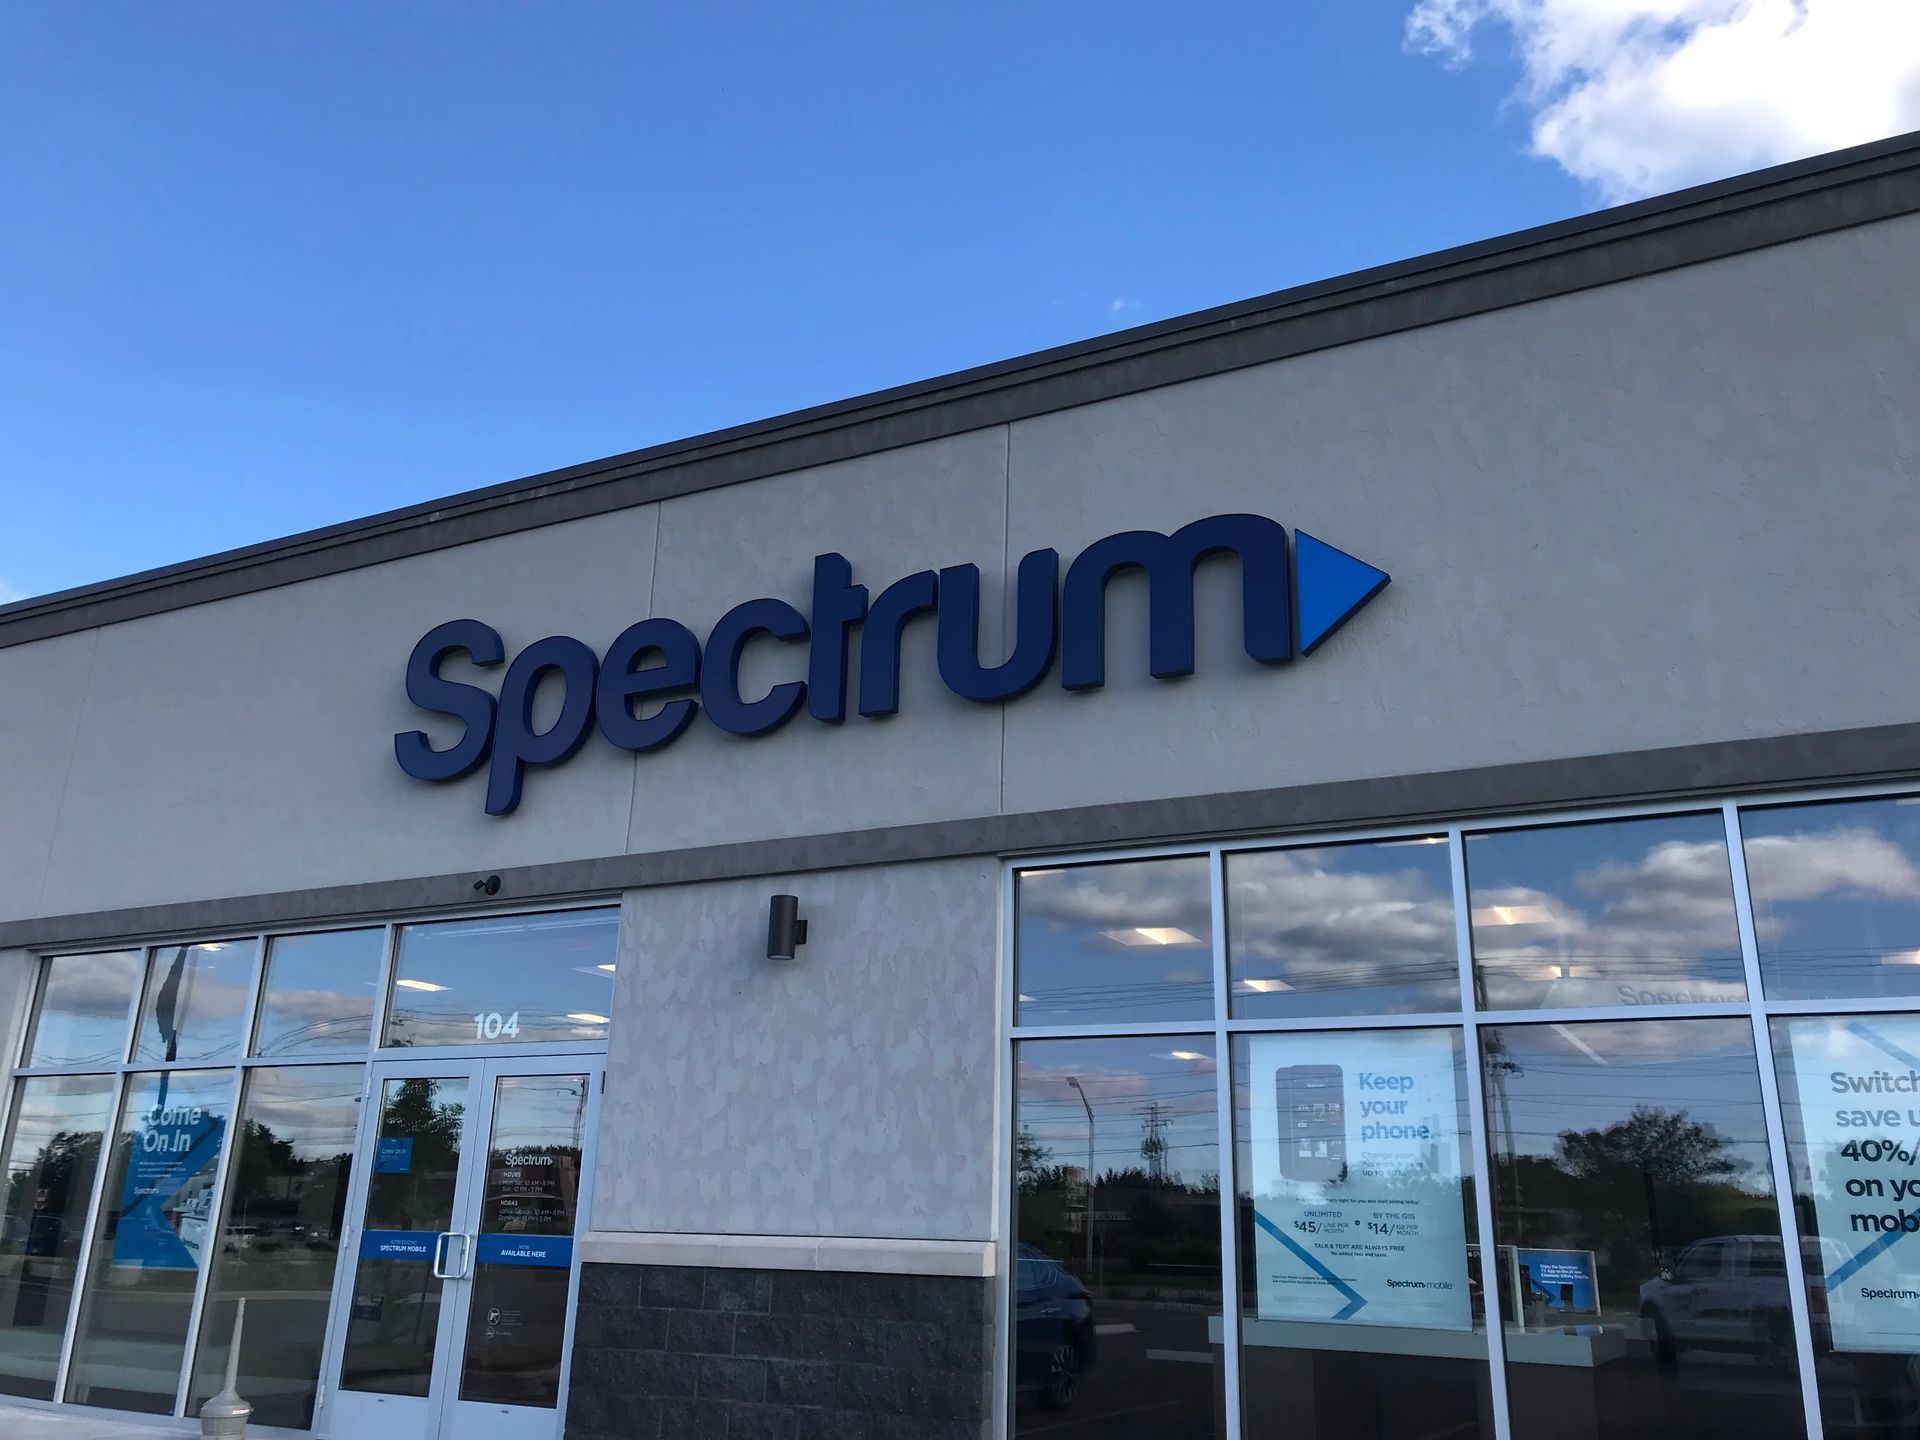 Spectrum Network unlock code for free